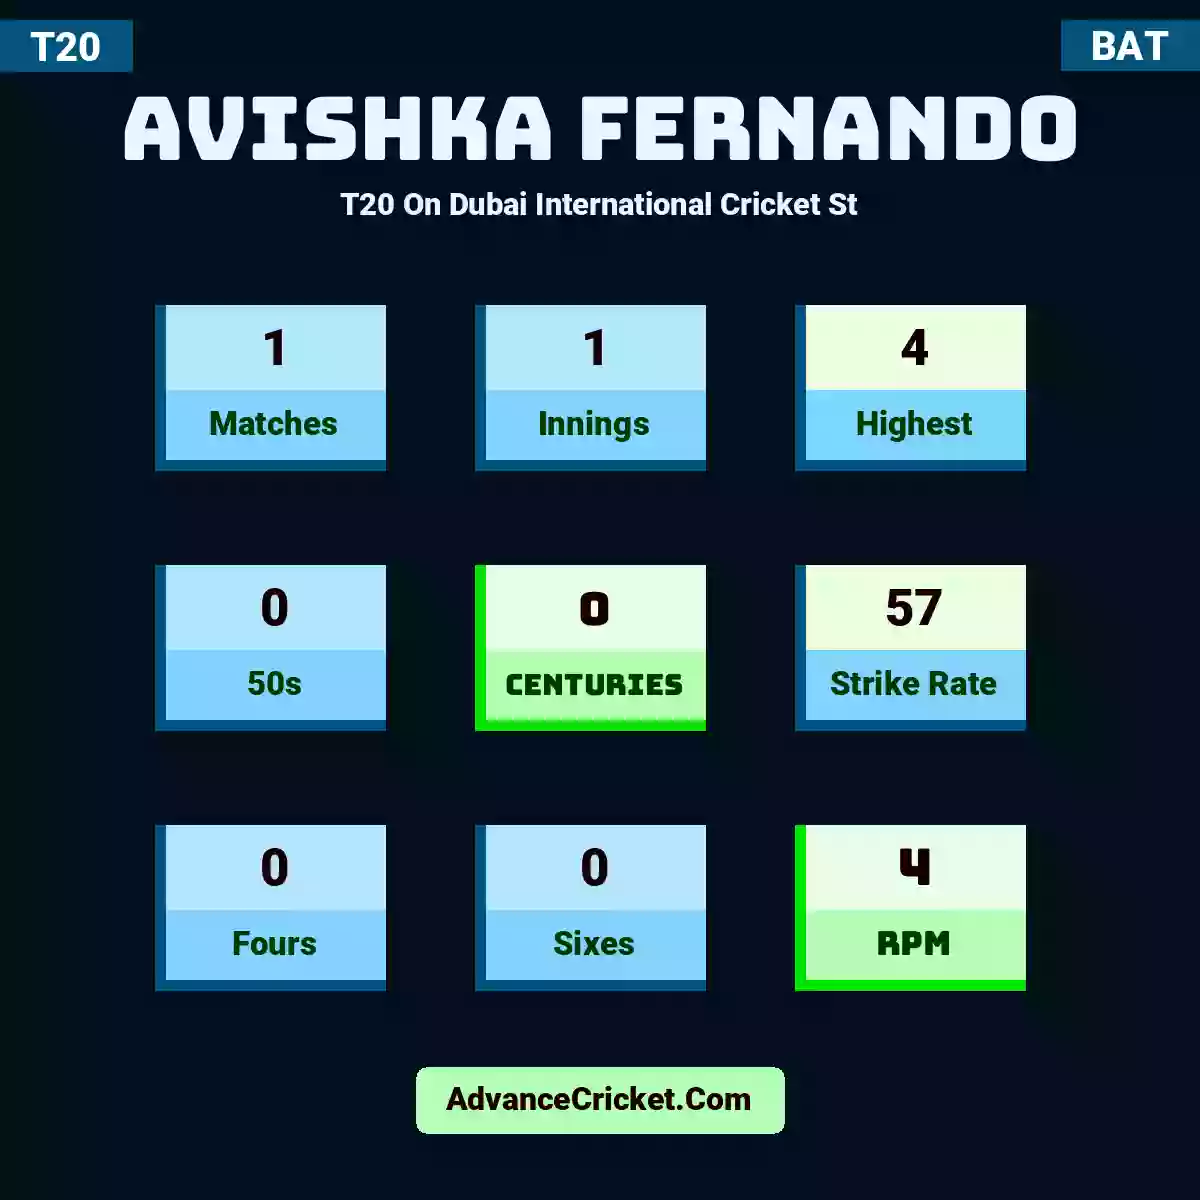 Avishka Fernando T20  On Dubai International Cricket St, Avishka Fernando played 1 matches, scored 4 runs as highest, 0 half-centuries, and 0 centuries, with a strike rate of 57. A.Fernando hit 0 fours and 0 sixes, with an RPM of 4.